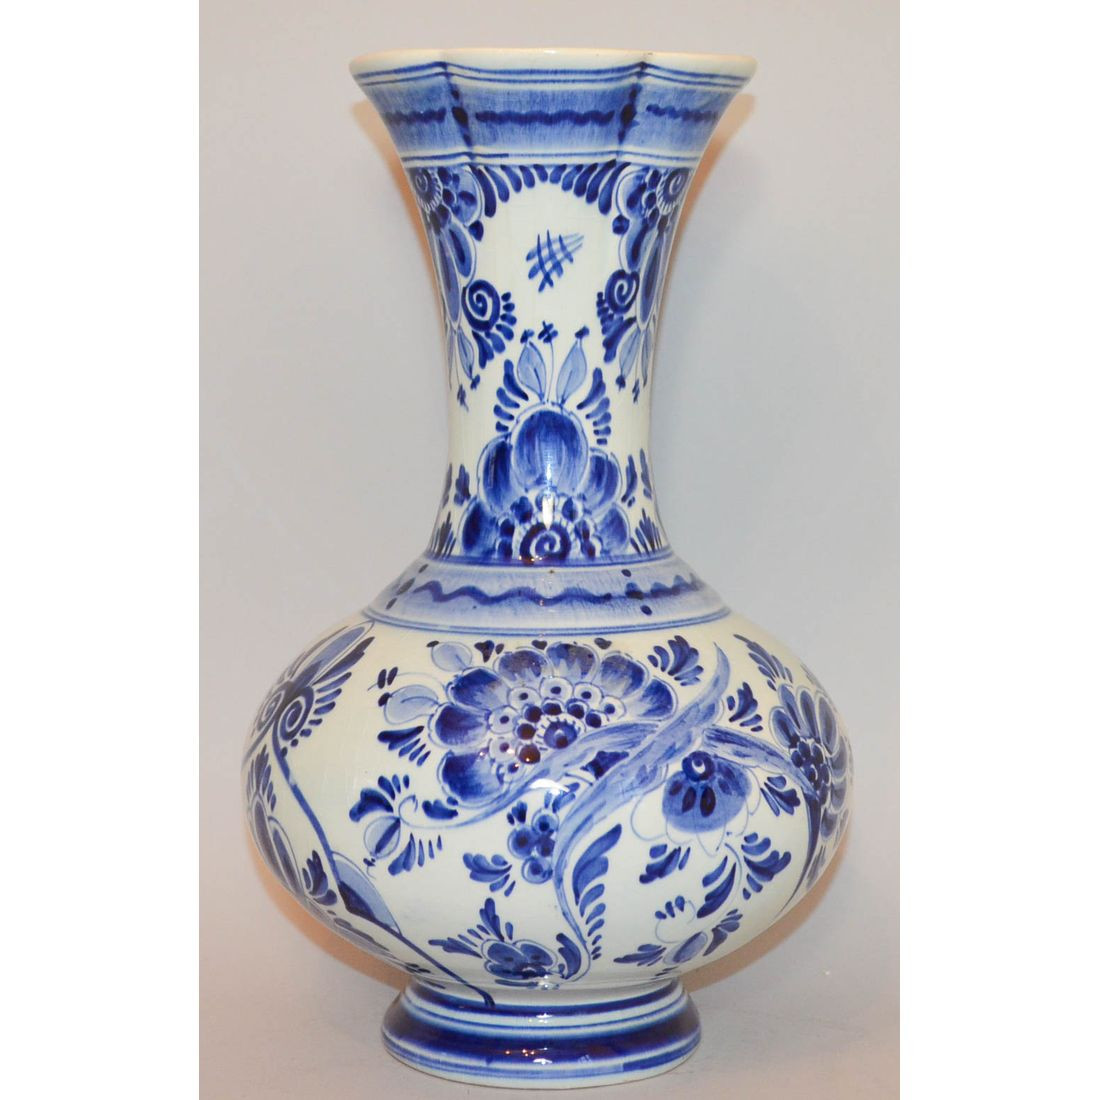 25 Cute Delft Vase Value 2023 free download delft vase value of vintage hand painted blue white floral porcelain delft vase regarding vintage hand painted blue white floral porcelain delft vase